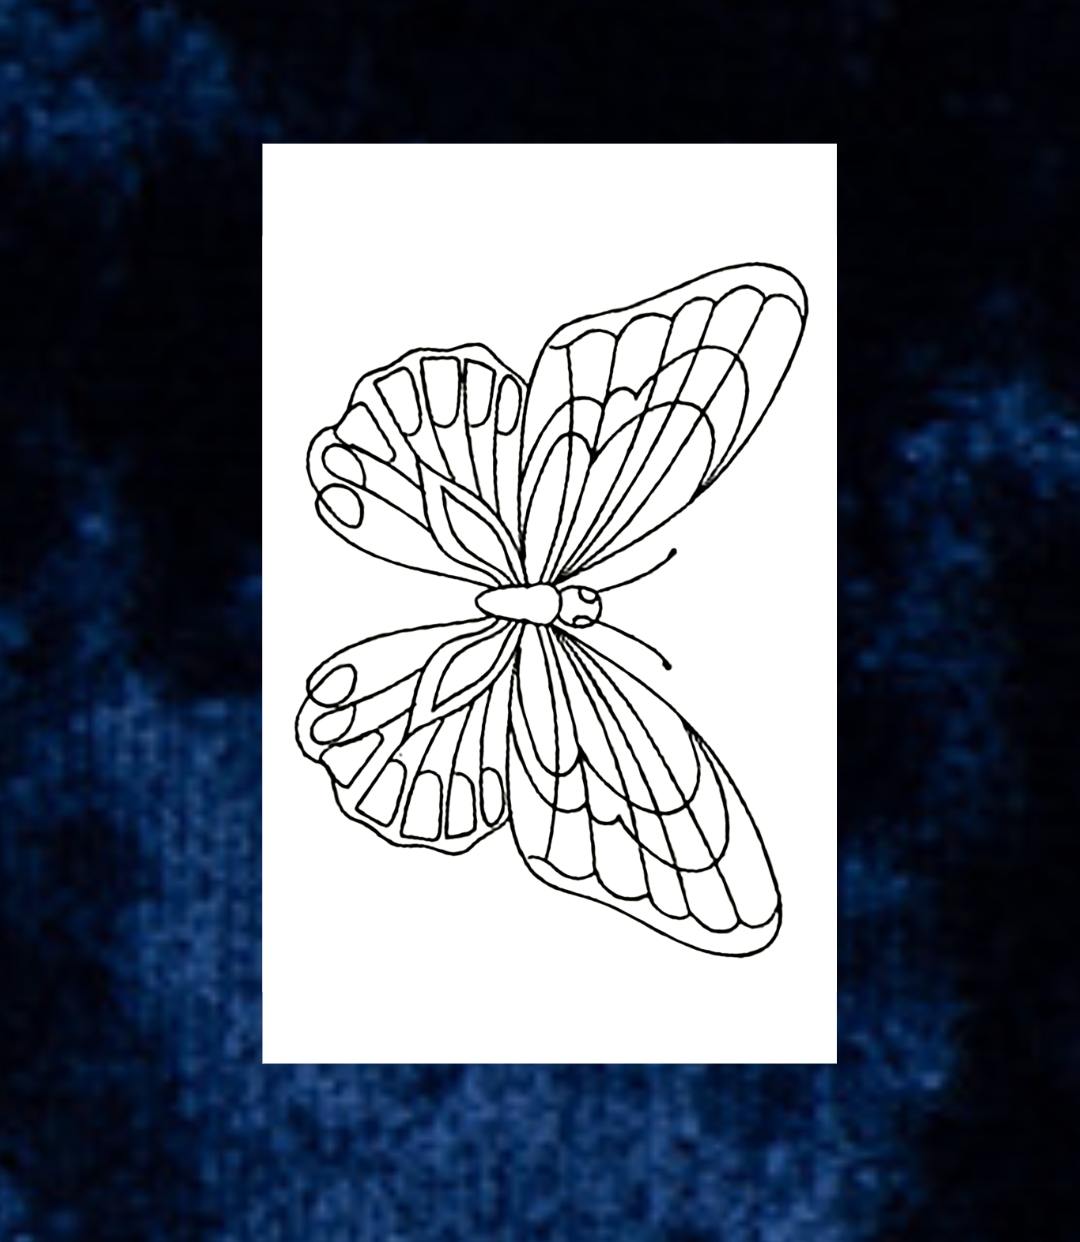 NEW Majestic Butterfly Tattoo